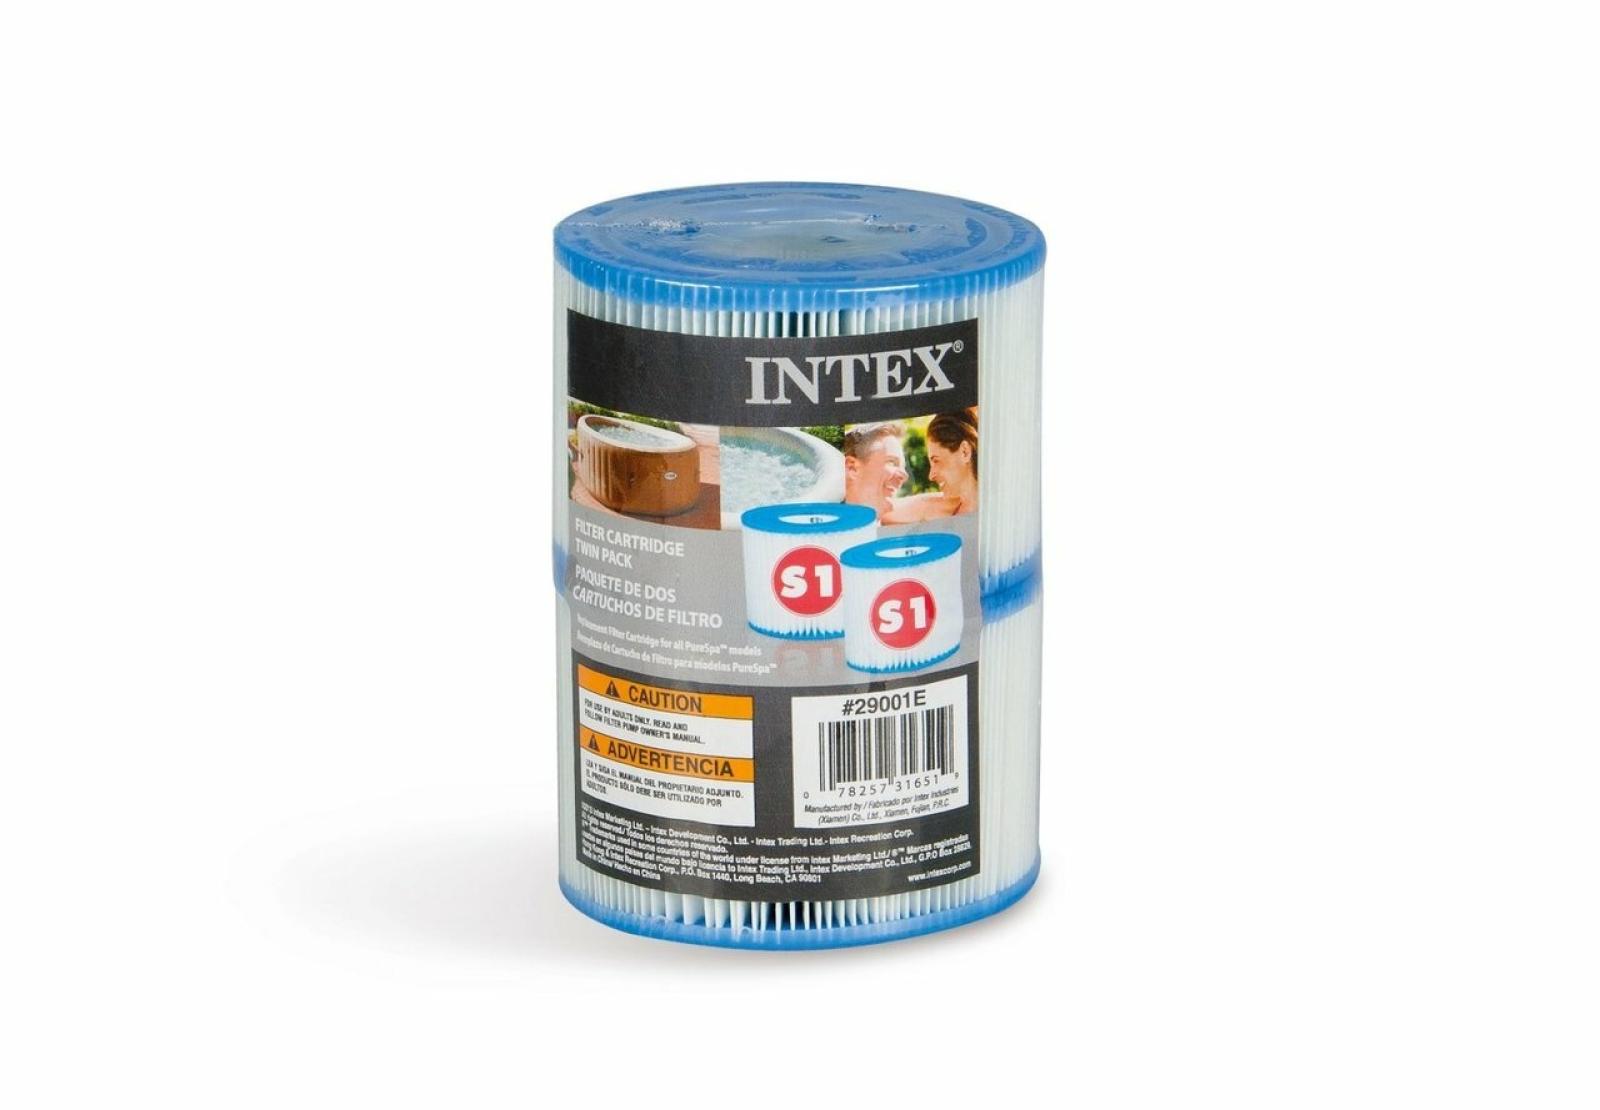 Intex Type S1 Hot Tub Filter Cartridge